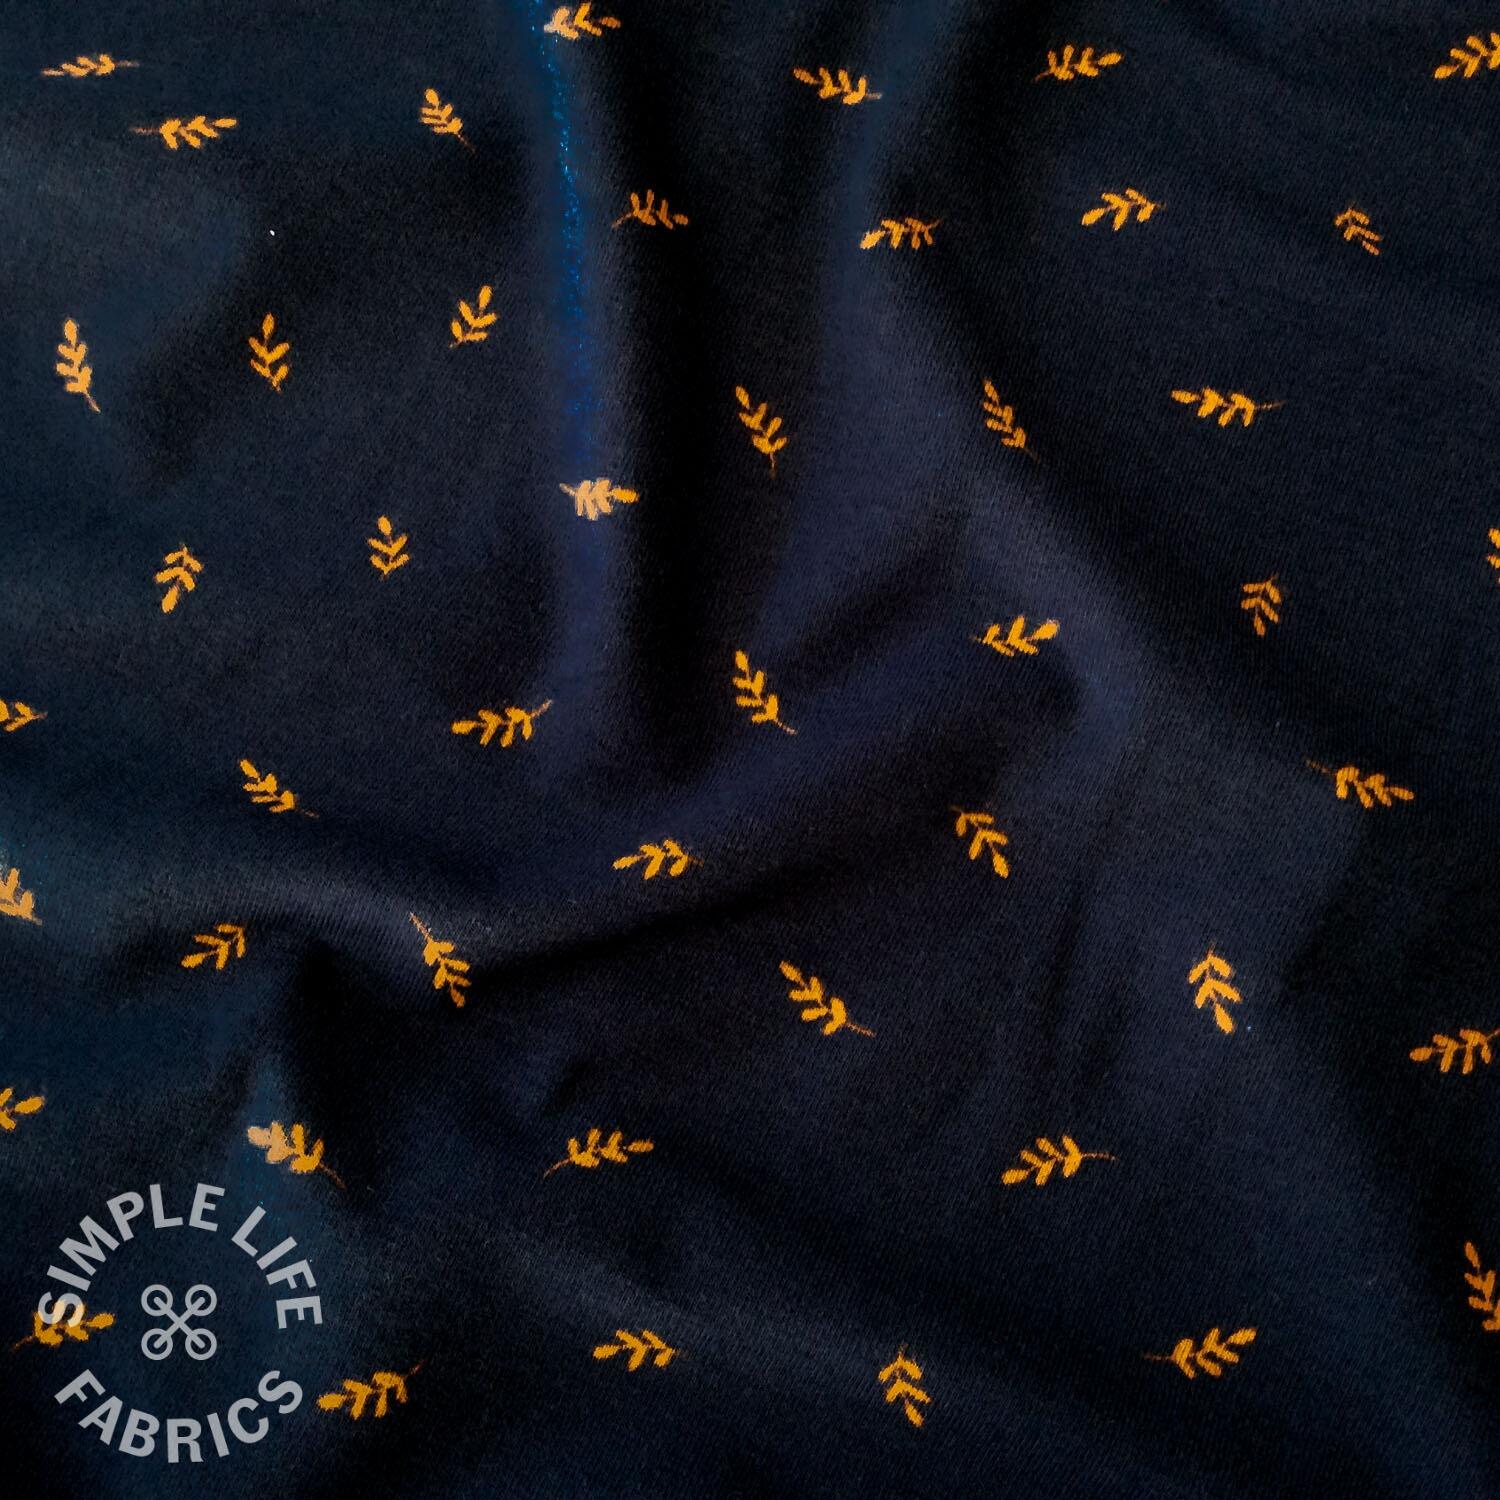 Dark navy organic leaf print jersey fabric